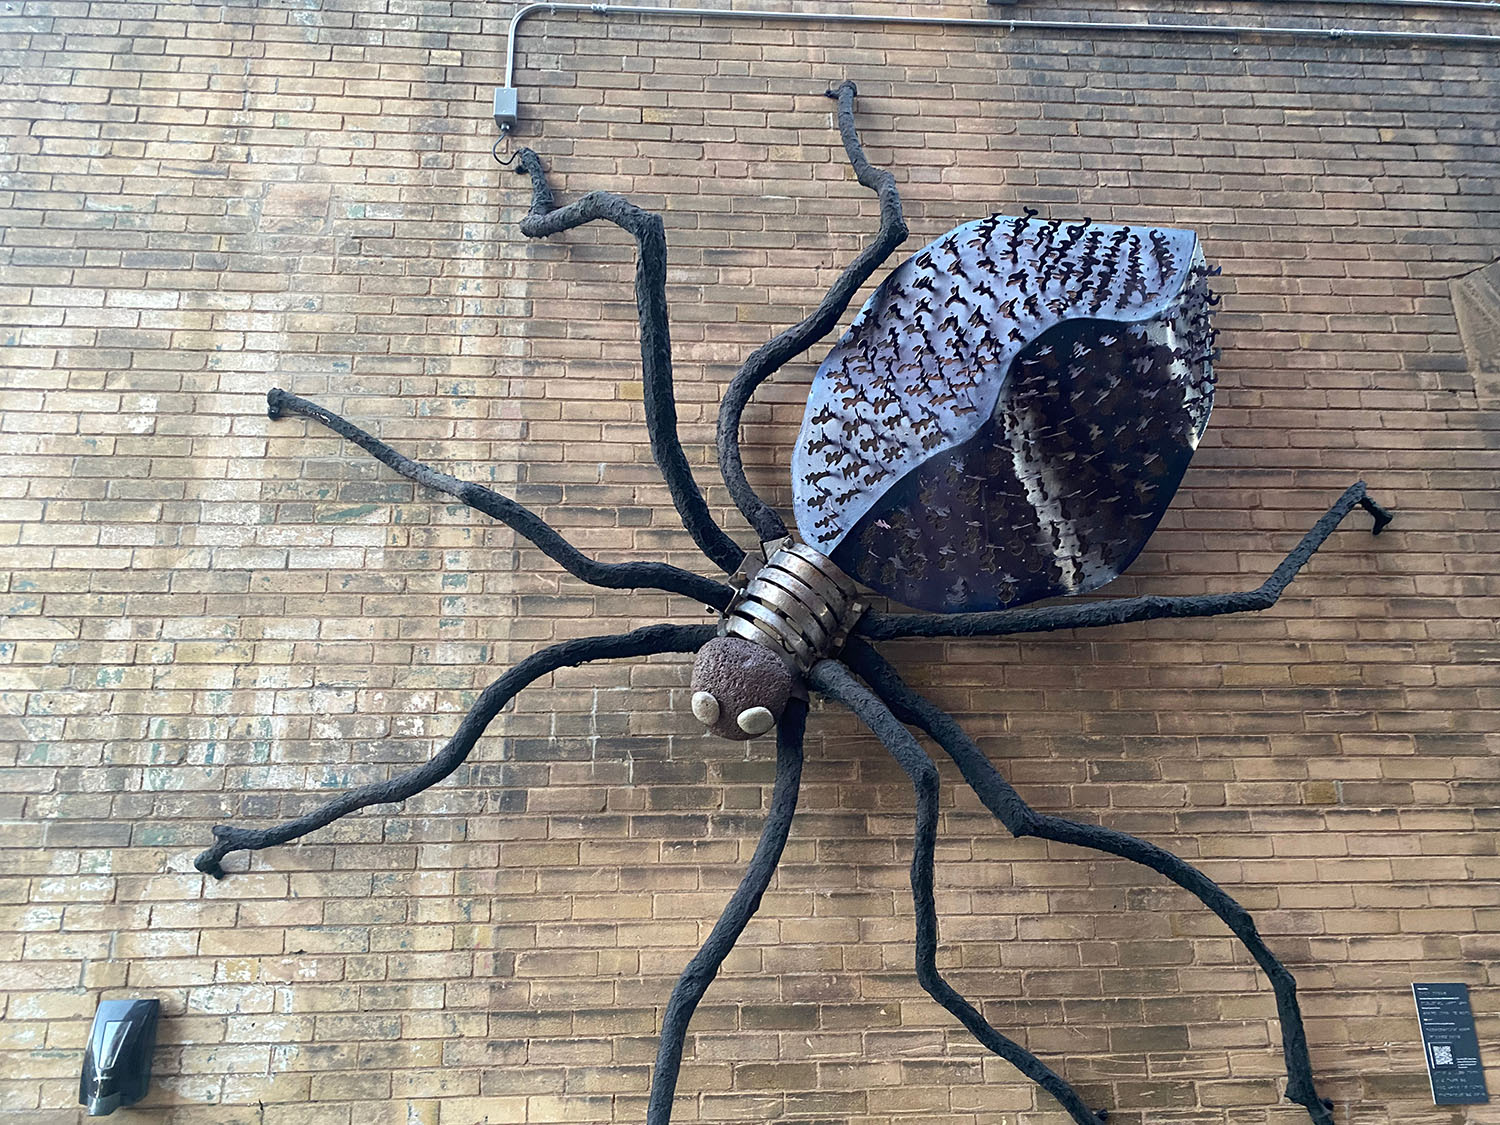 Giant spider sculpture attached to brick wall in Wichita, Kansas